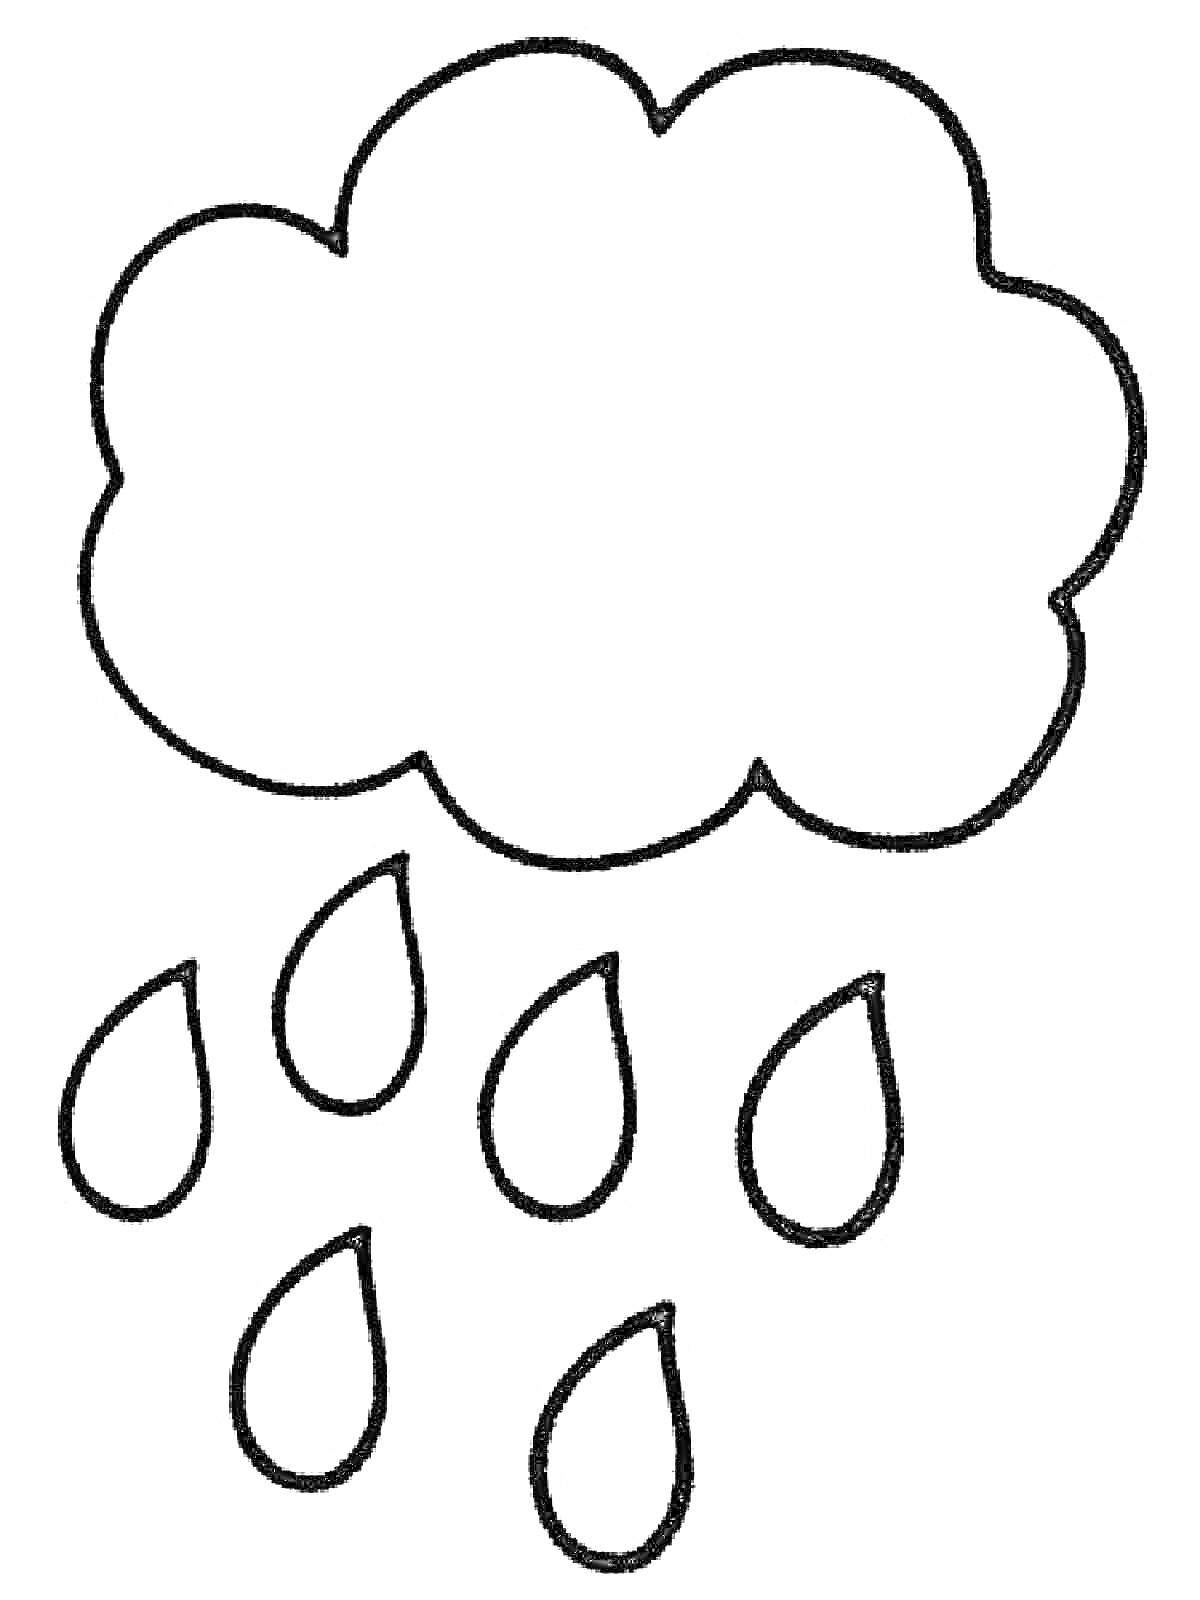 Раскраска Облако с каплями дождя